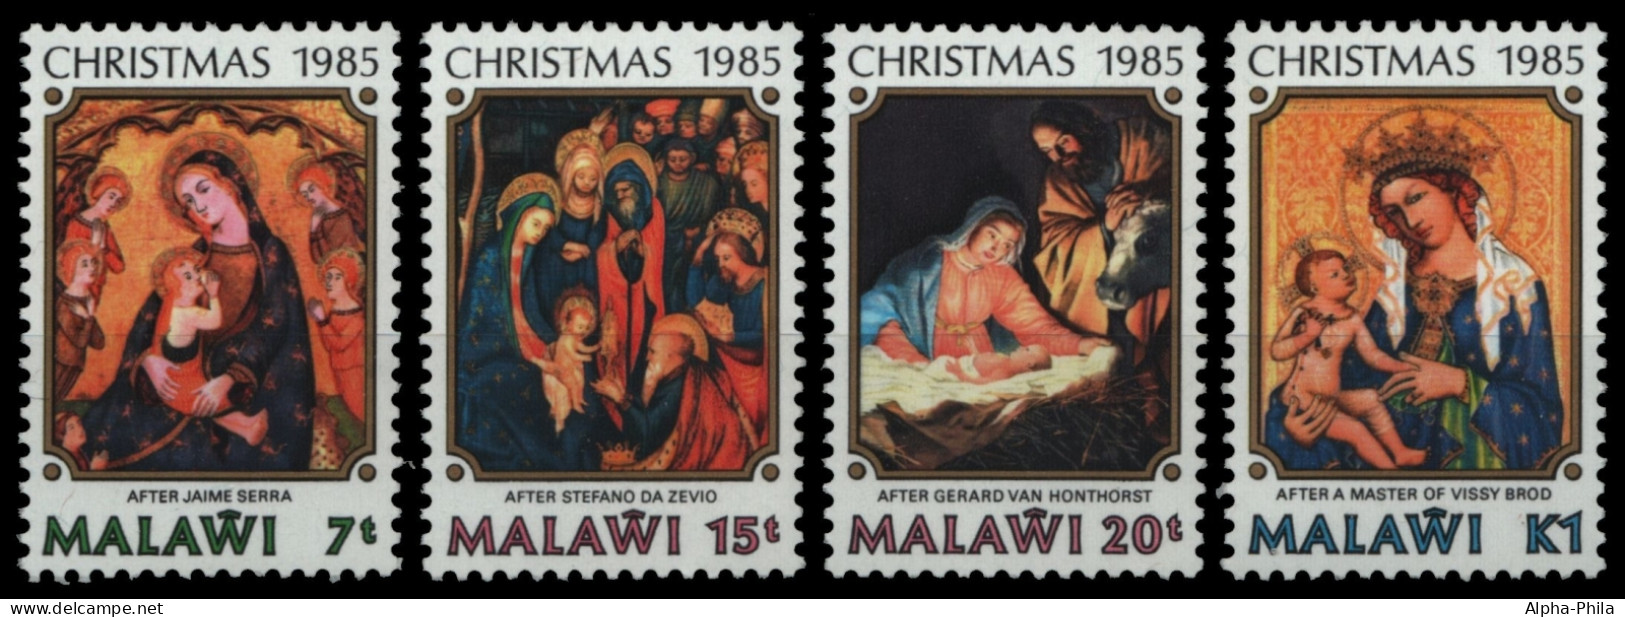 Malawi 1985 - Mi-Nr. 457-460 ** - MNH - Weihnachten / X-mas - Malawi (1964-...)